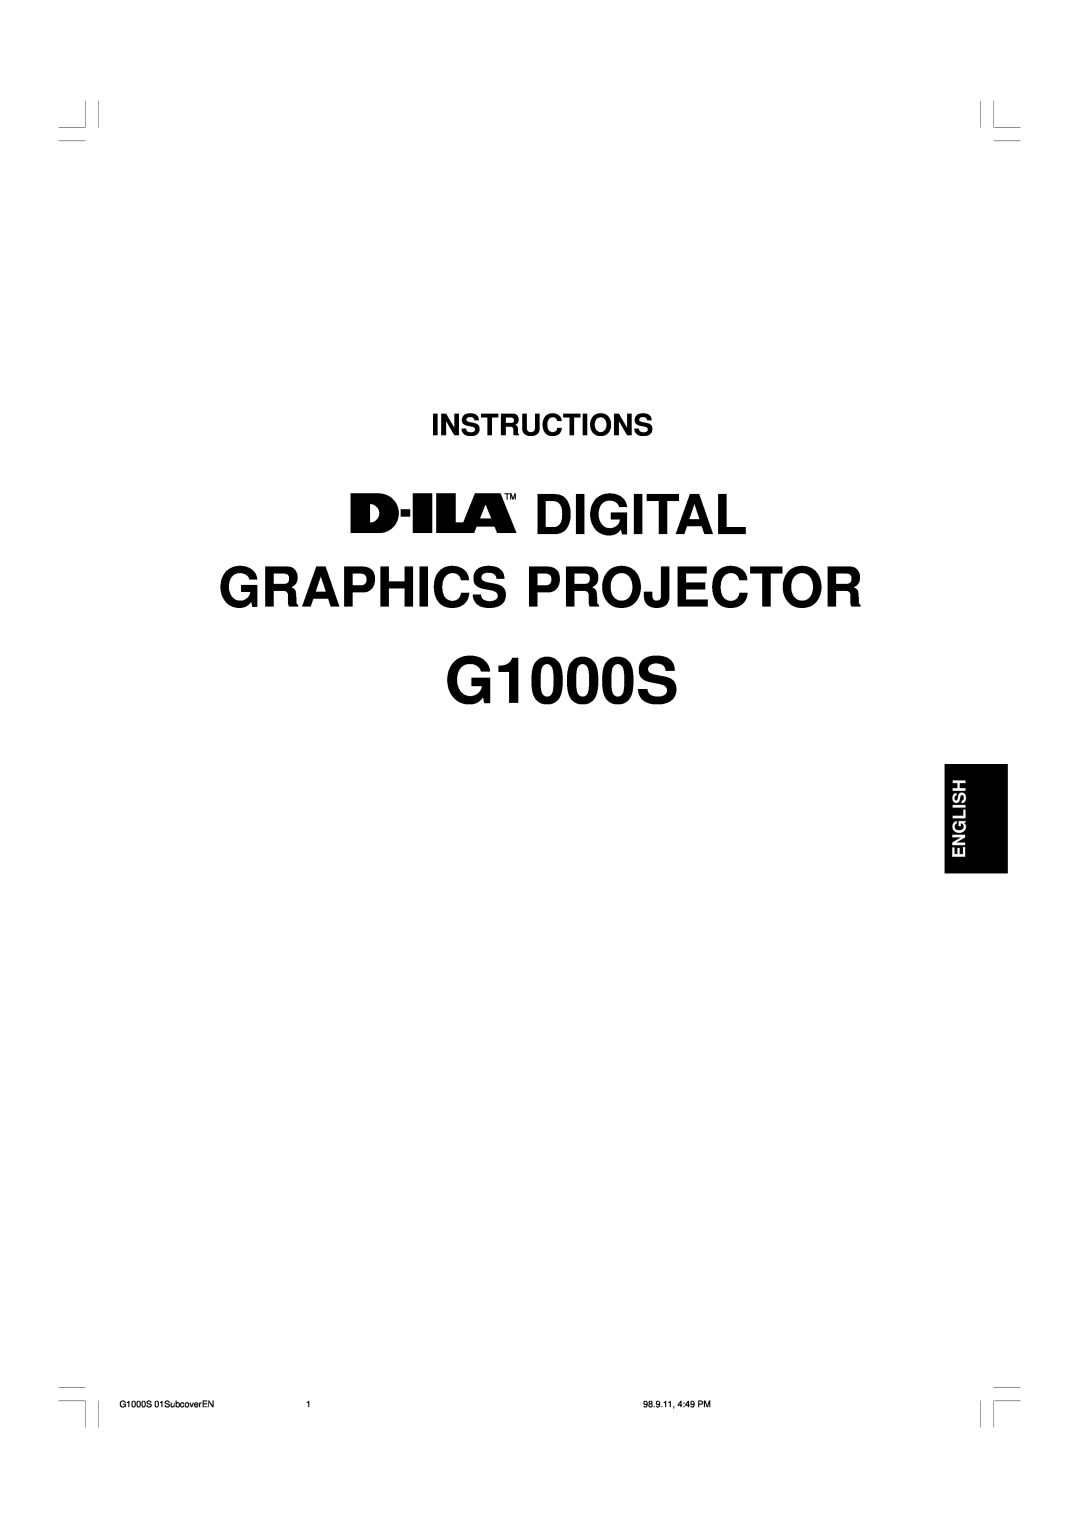 JVC manual Digital Graphics Projector, Instructions, English, G1000S 01SubcoverEN, 98.9.11, 449 PM 